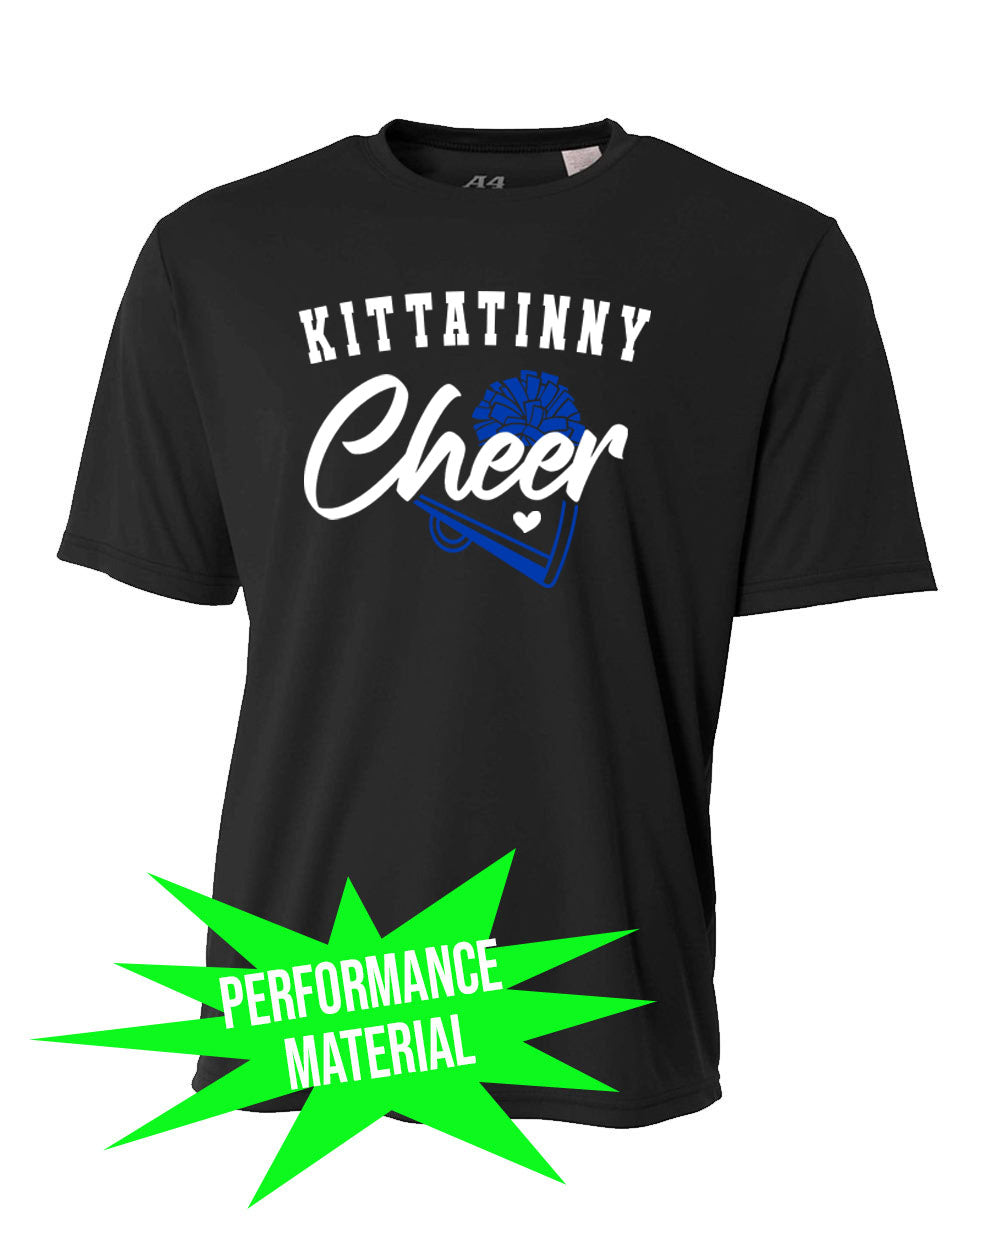 Kittatinny Cheer Performance Material T-Shirt Design 9